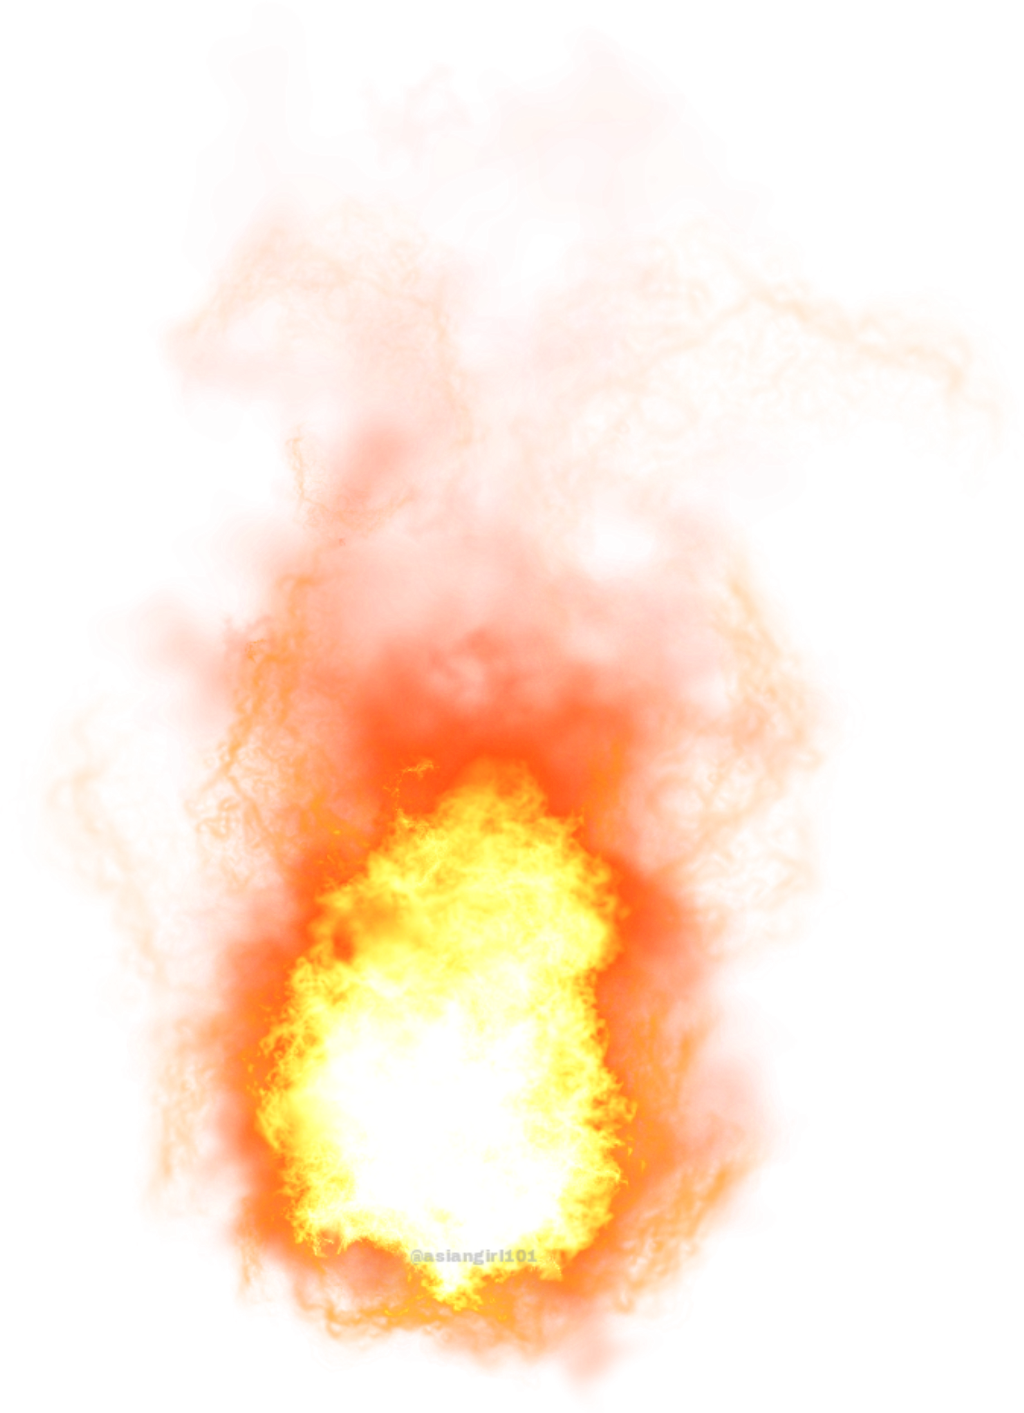 Fireball Background PNG Image